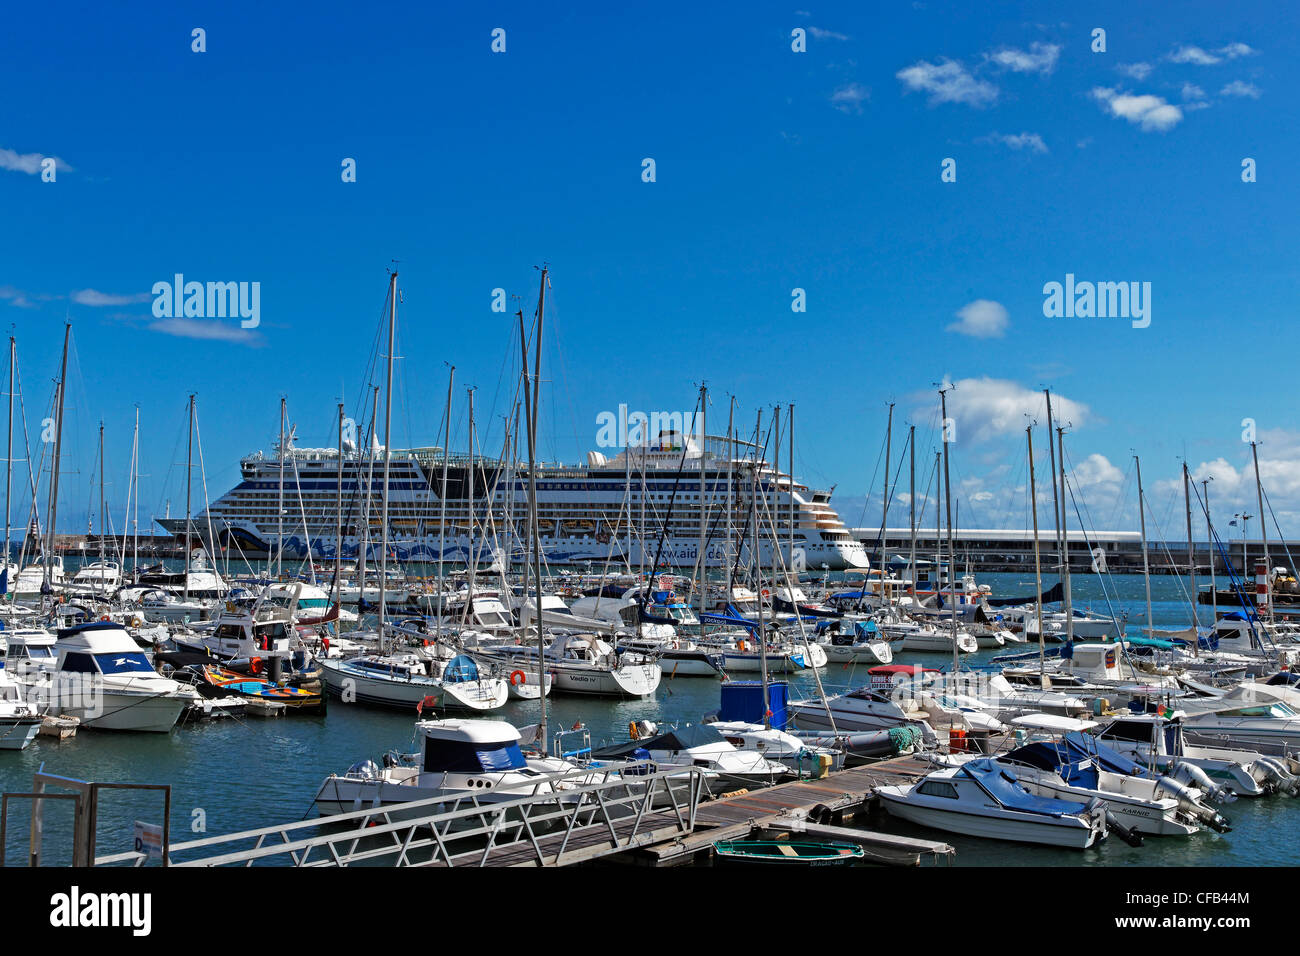 Europe, Portugal, Republica Portuguesa, Madeira, Funchal, Avenida do Mar, yacht harbour, cruise ship, AIDA, luna, place of inter Stock Photo